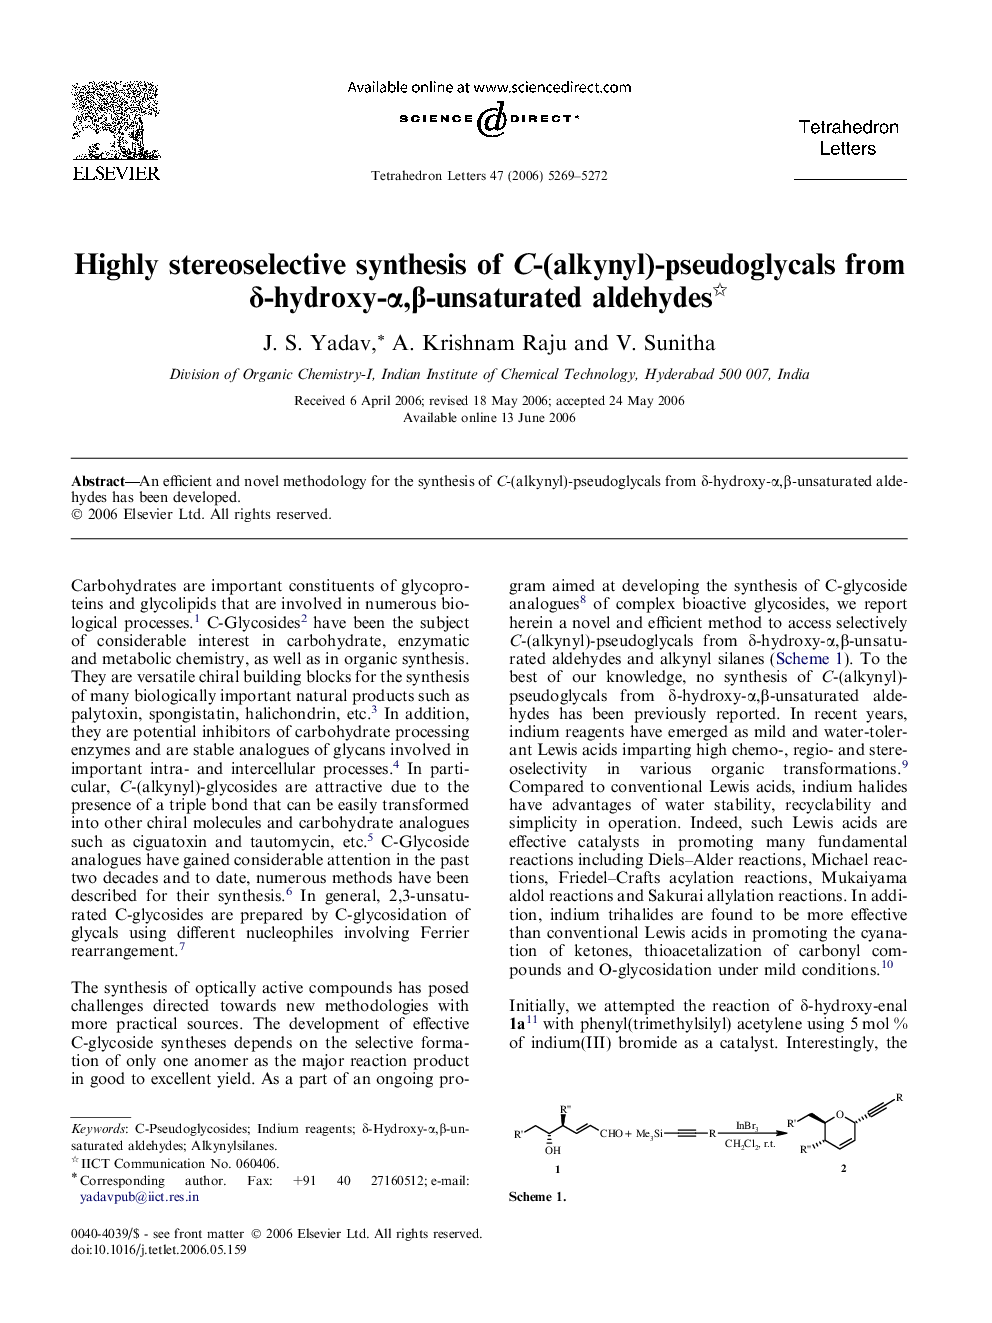 Highly stereoselective synthesis of C-(alkynyl)-pseudoglycals from Î´-hydroxy-Î±,Î²-unsaturated aldehydes